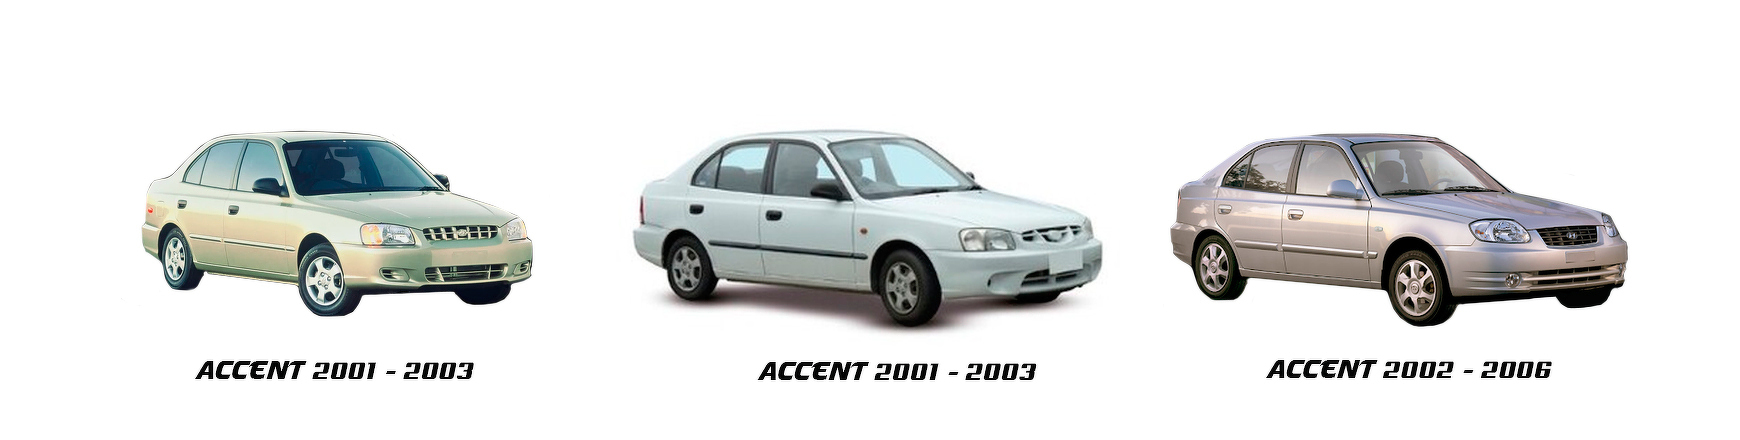 hyundai accent 2000 2001 2002